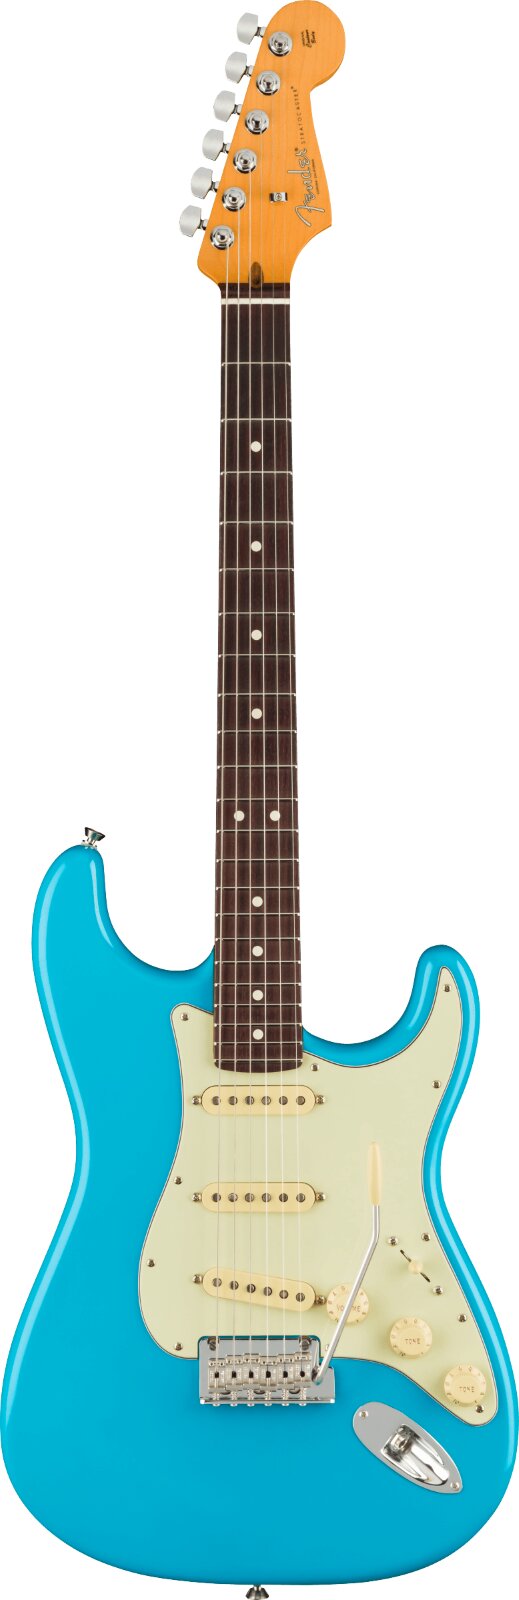 Fender American Professional II Stratocaster Rosewood Griffbrett Miami Blue : photo 1